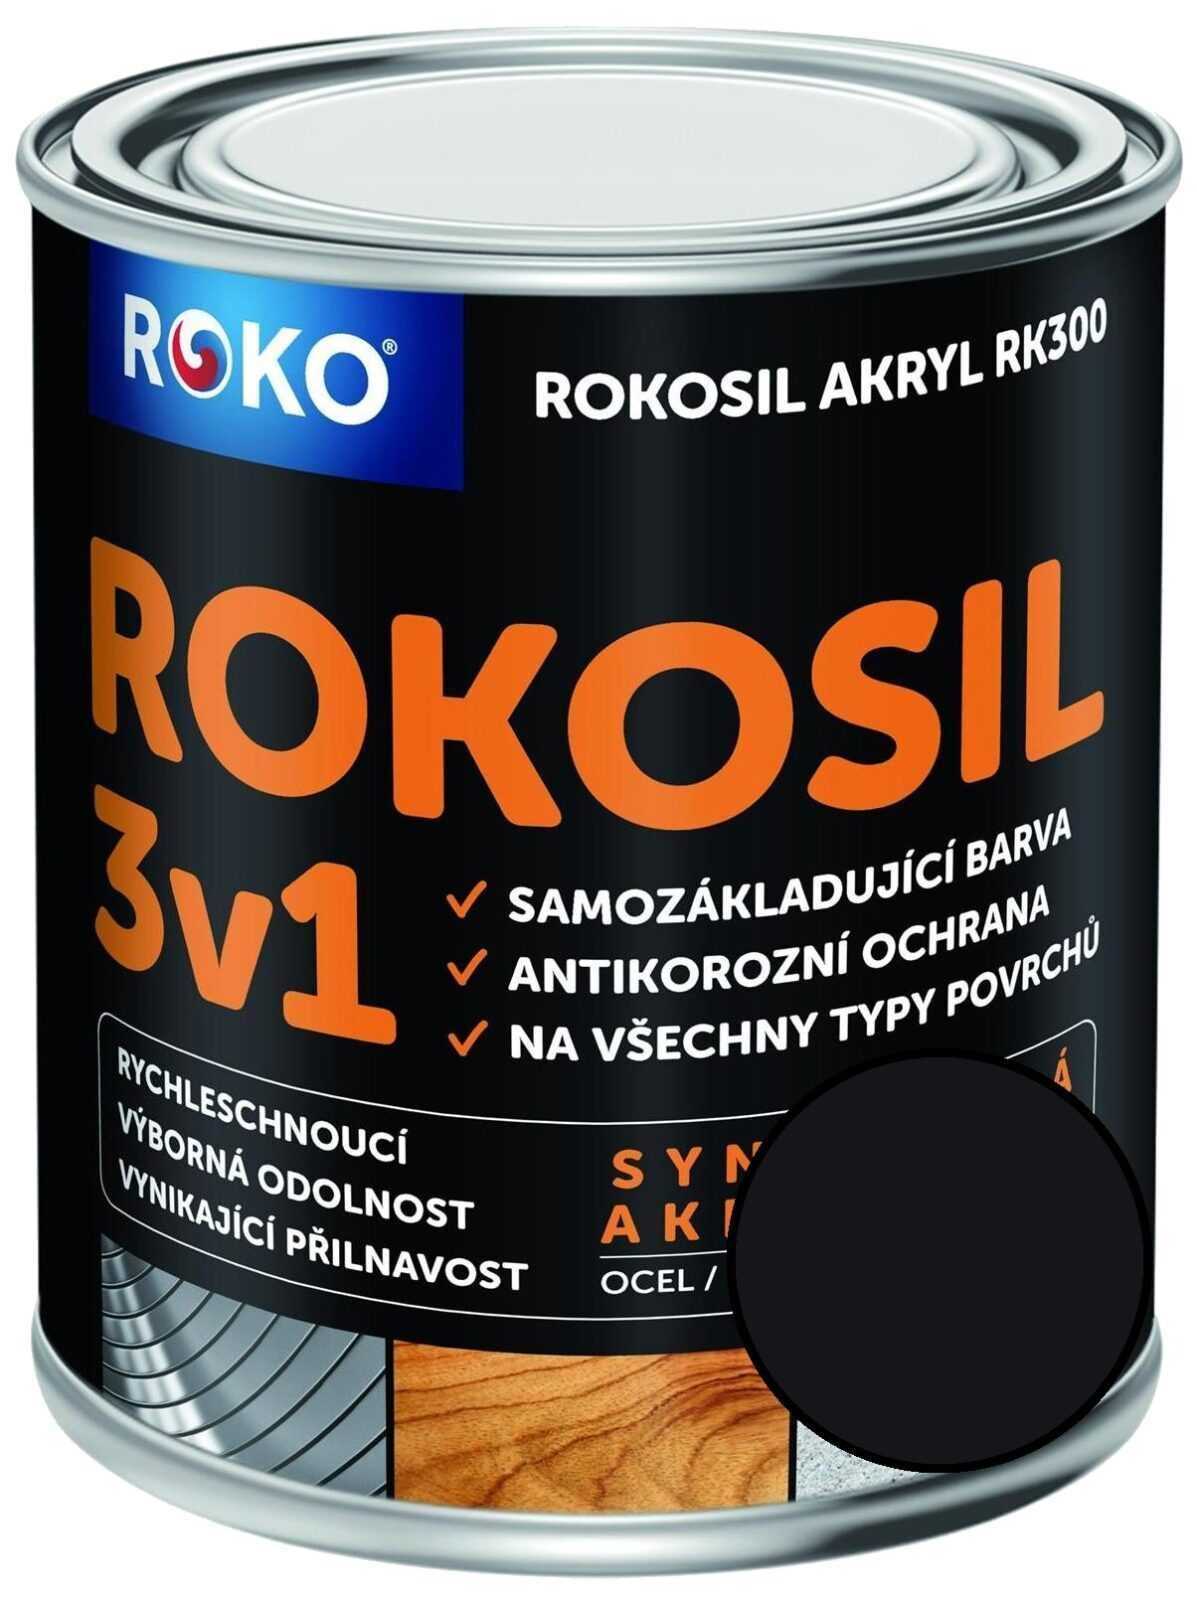 Barva samozákladující Rokosil akryl 3v1 RK 300 černá mat 0